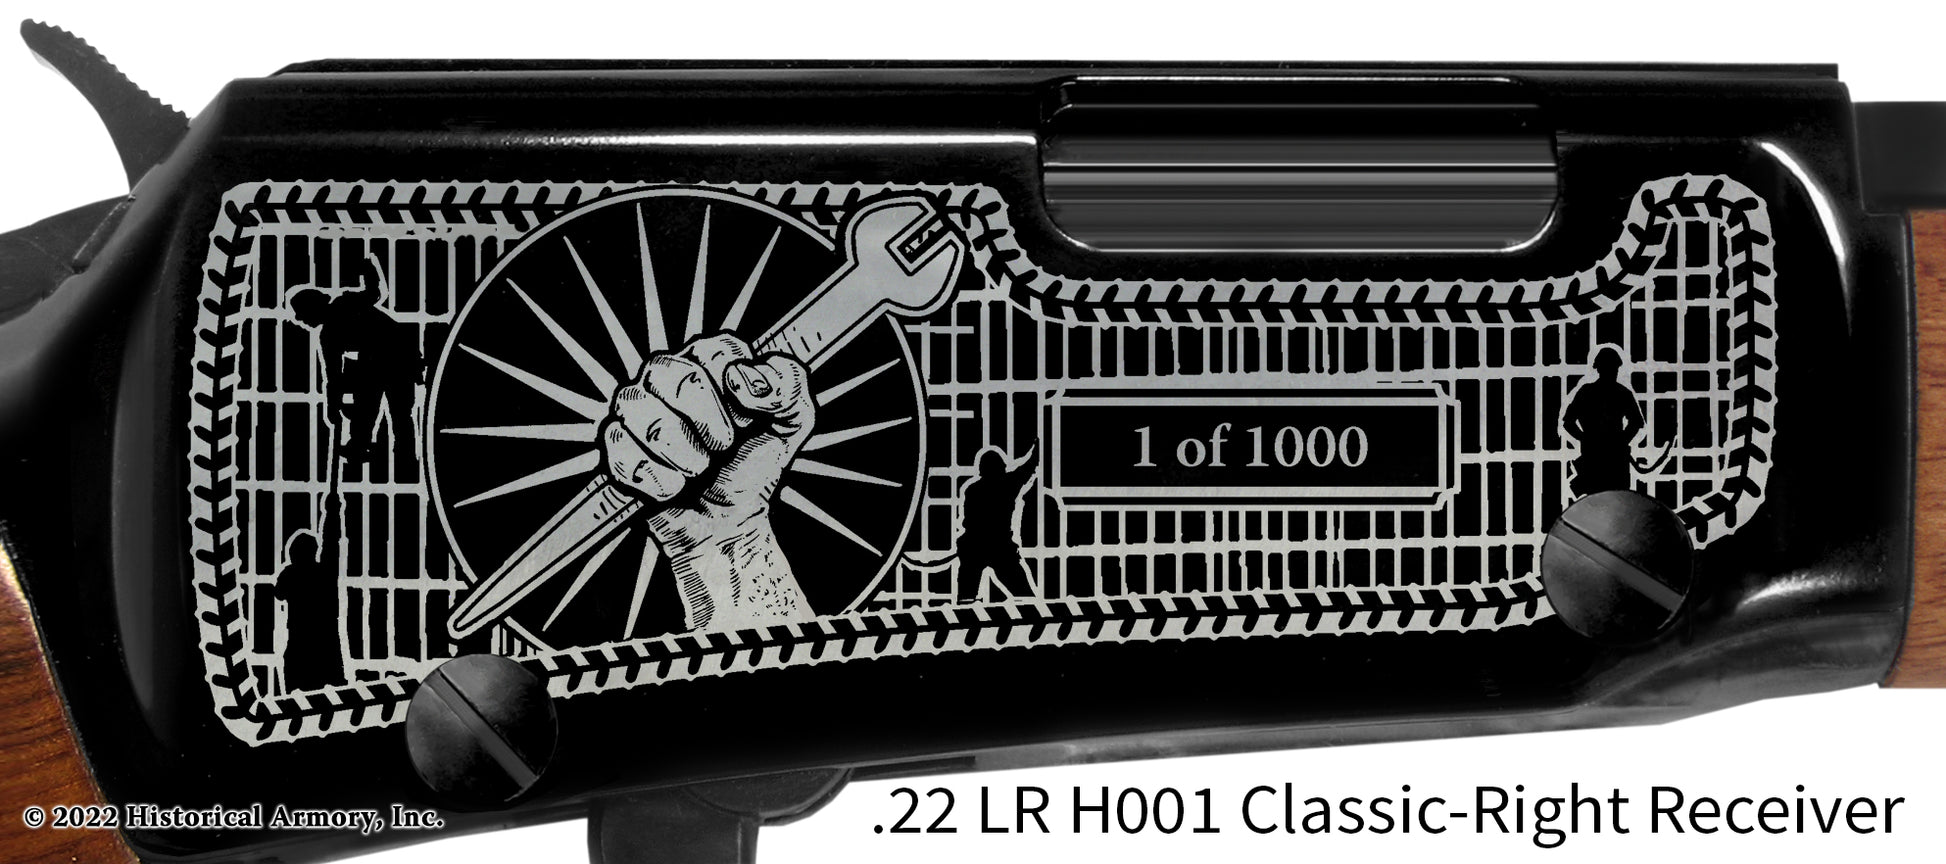 Ironworker .22 LR Henry Rifle Engraving Detail